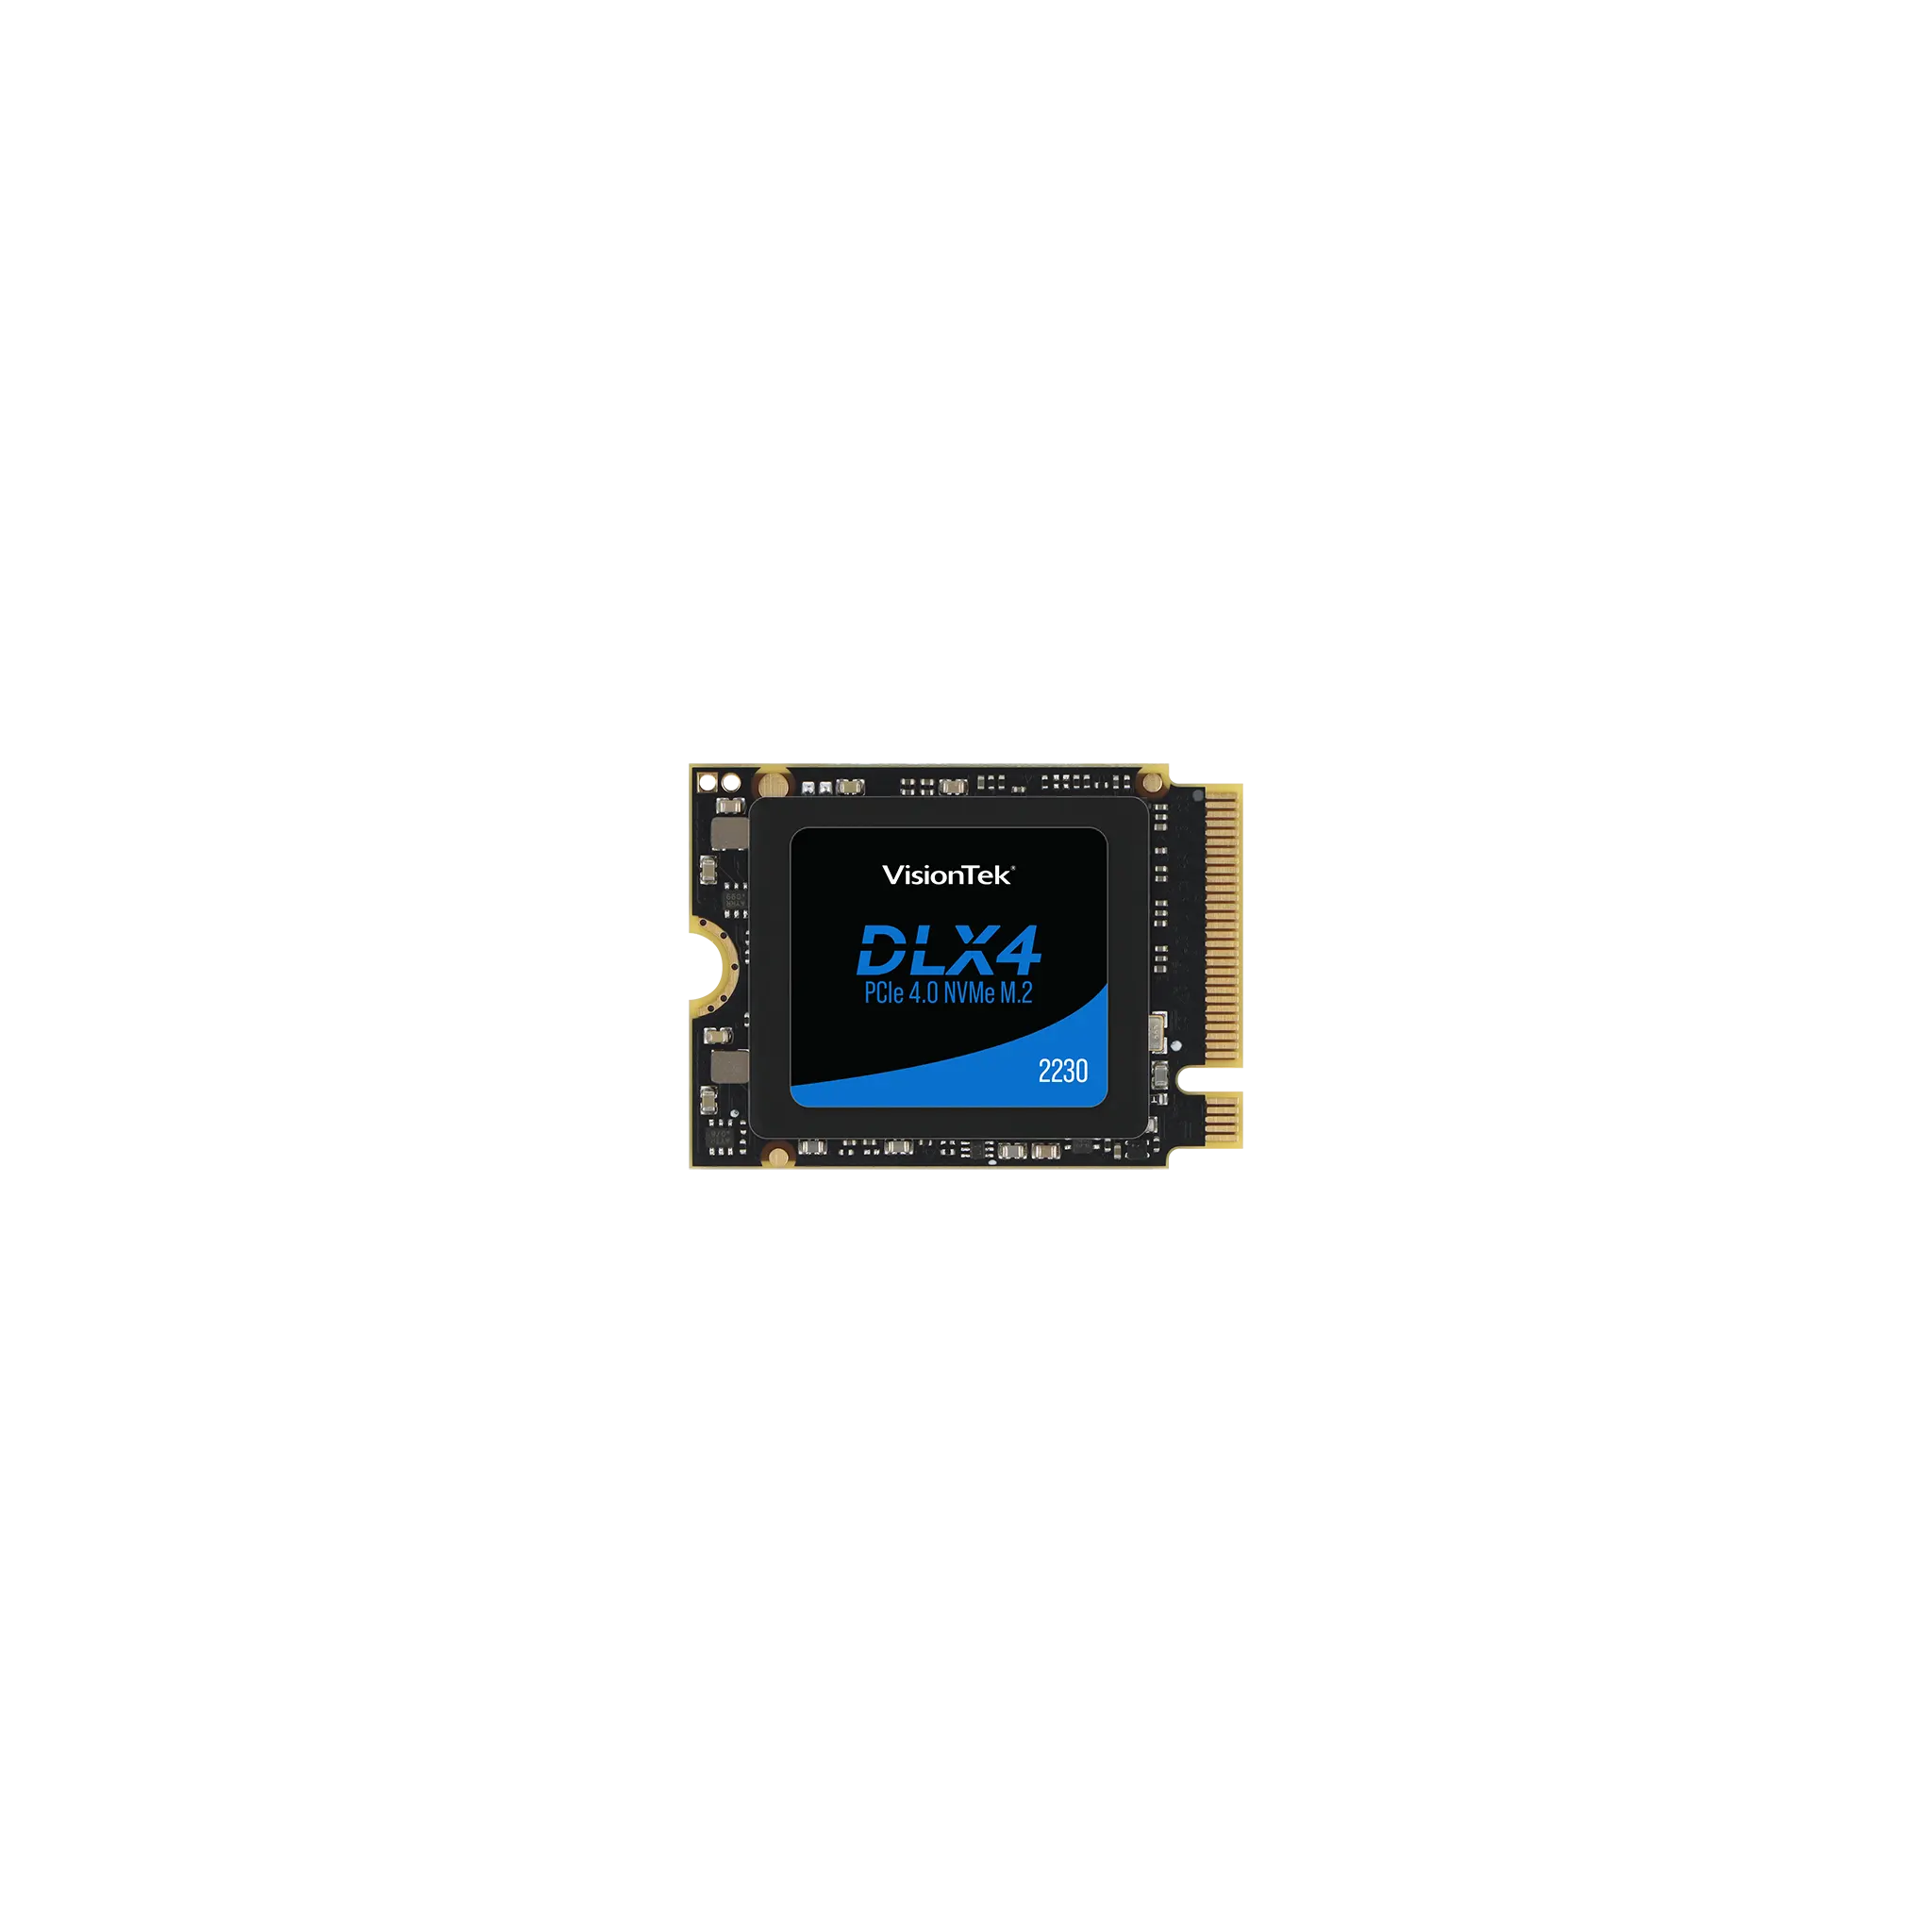 M.2 2230 NVMe SSD, PCIe Gen 3 and Gen 4